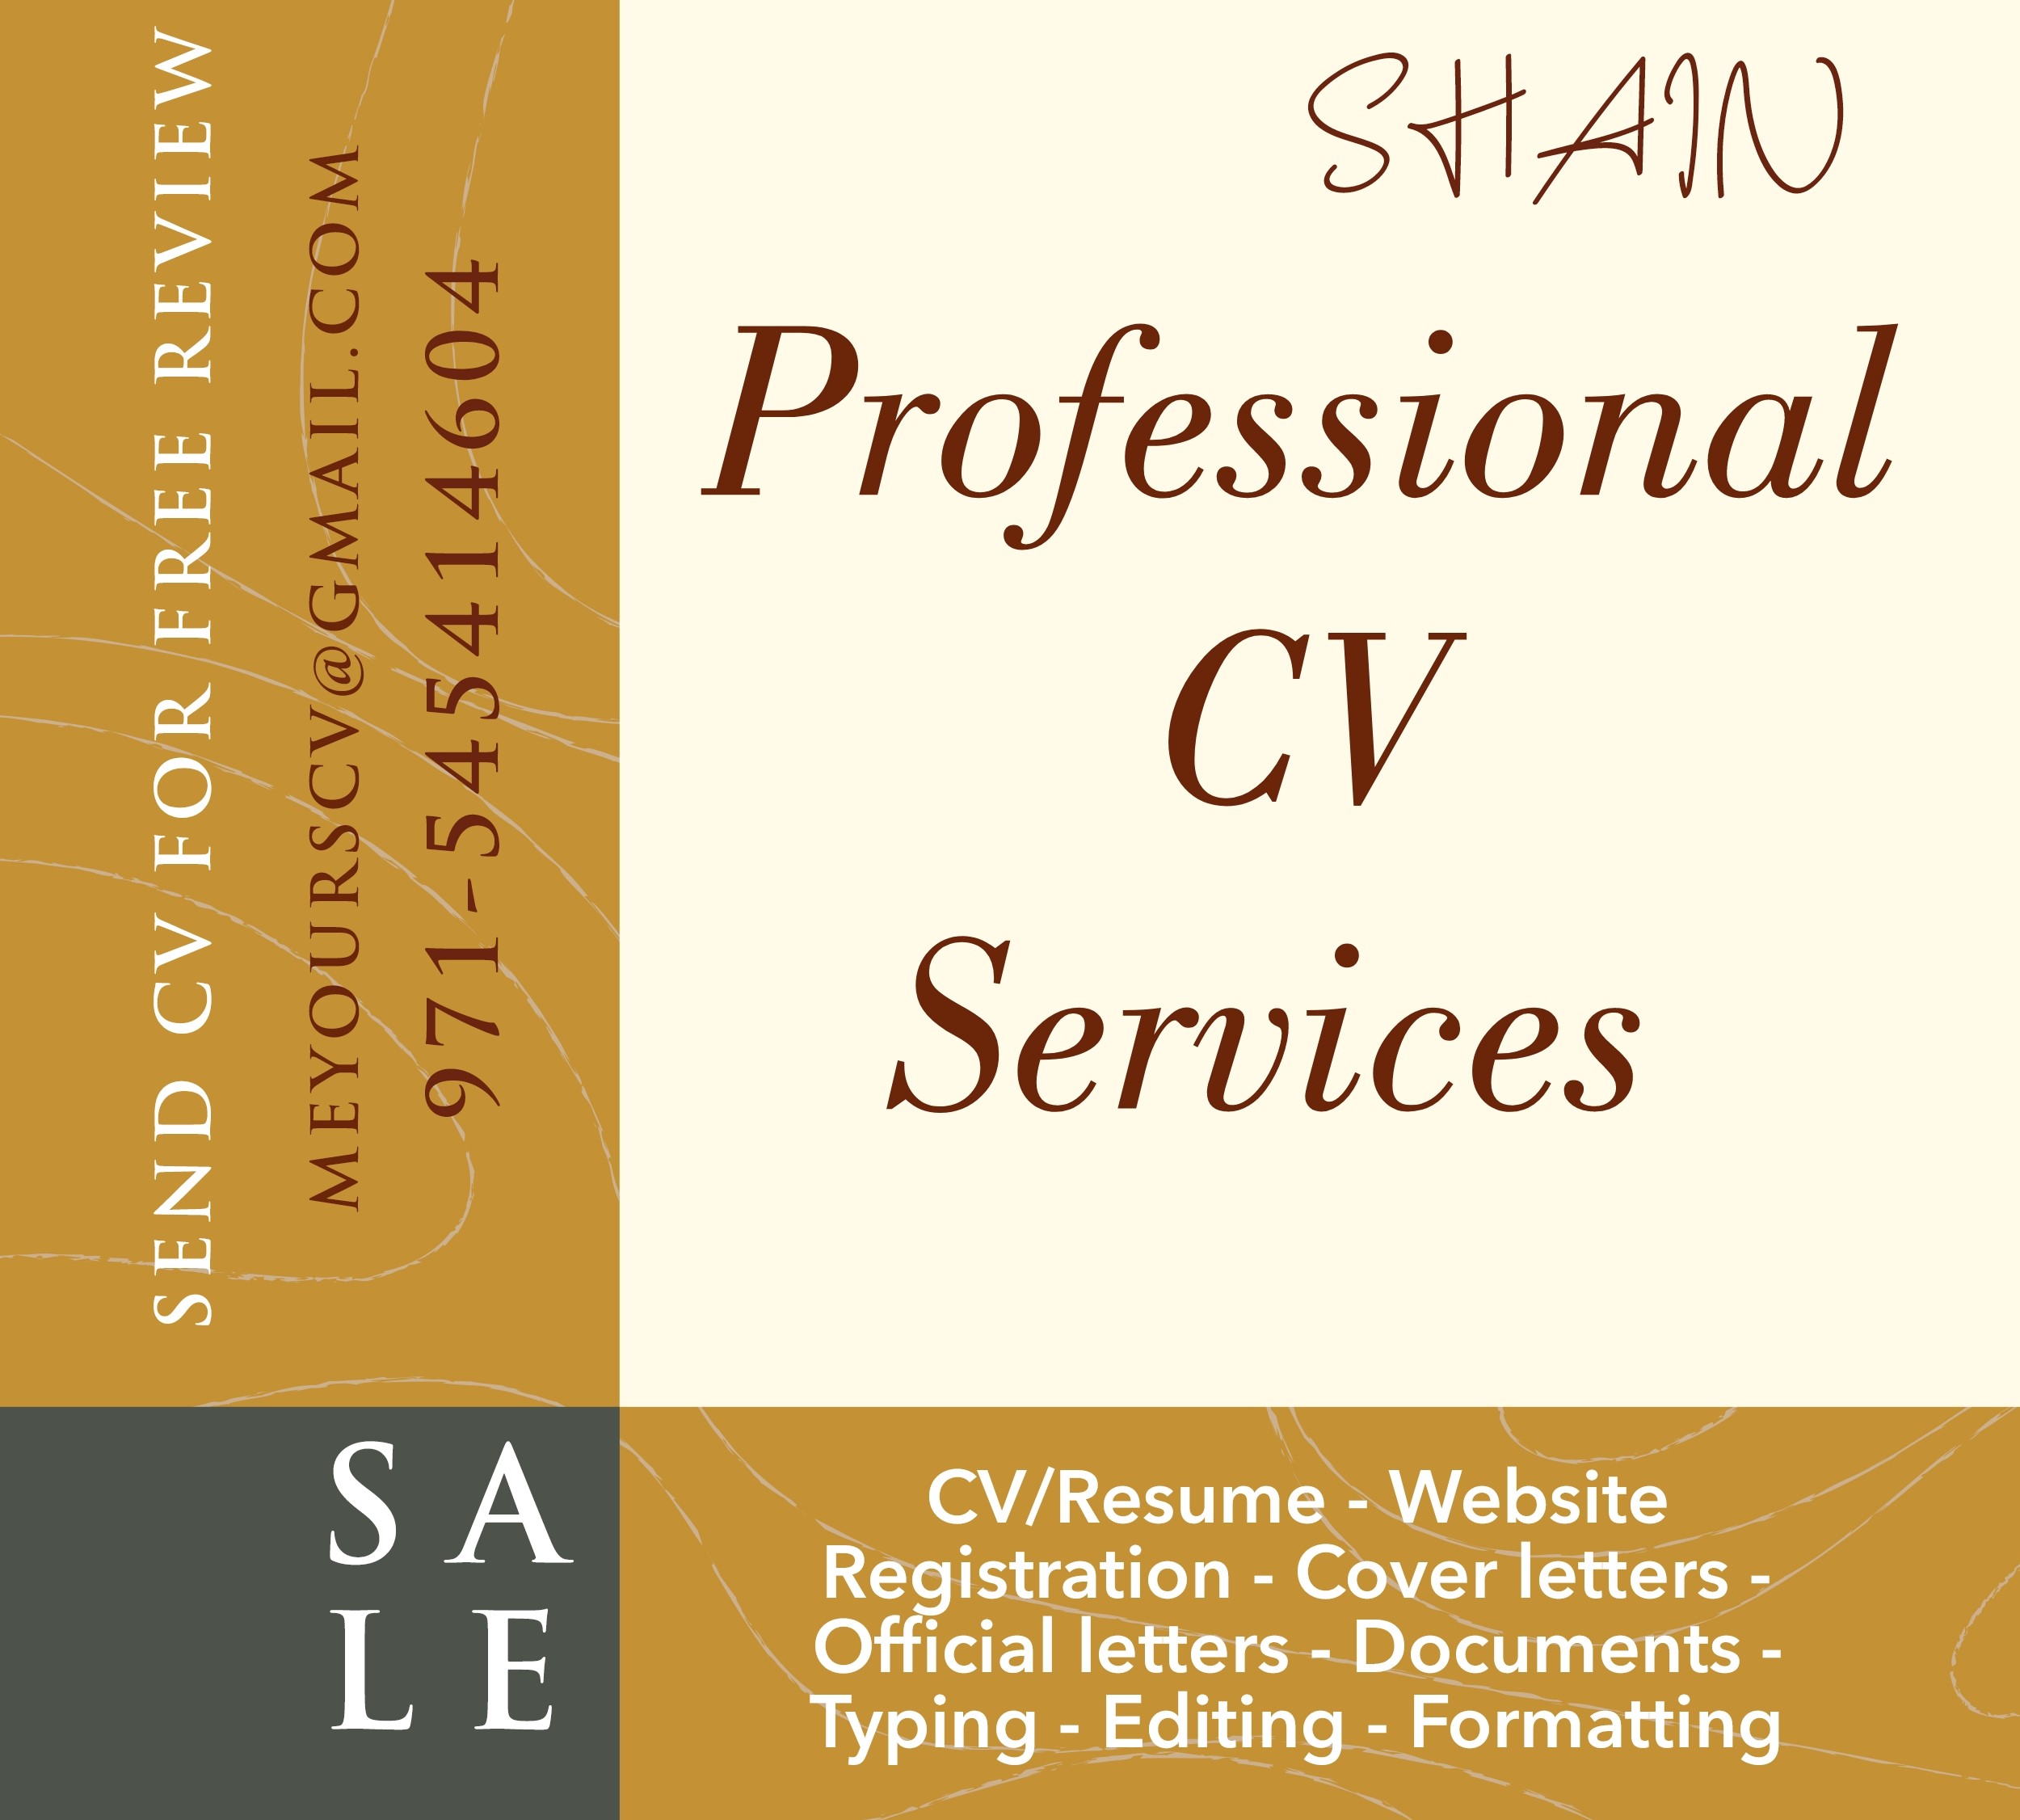 Professional CV writing in Dubai